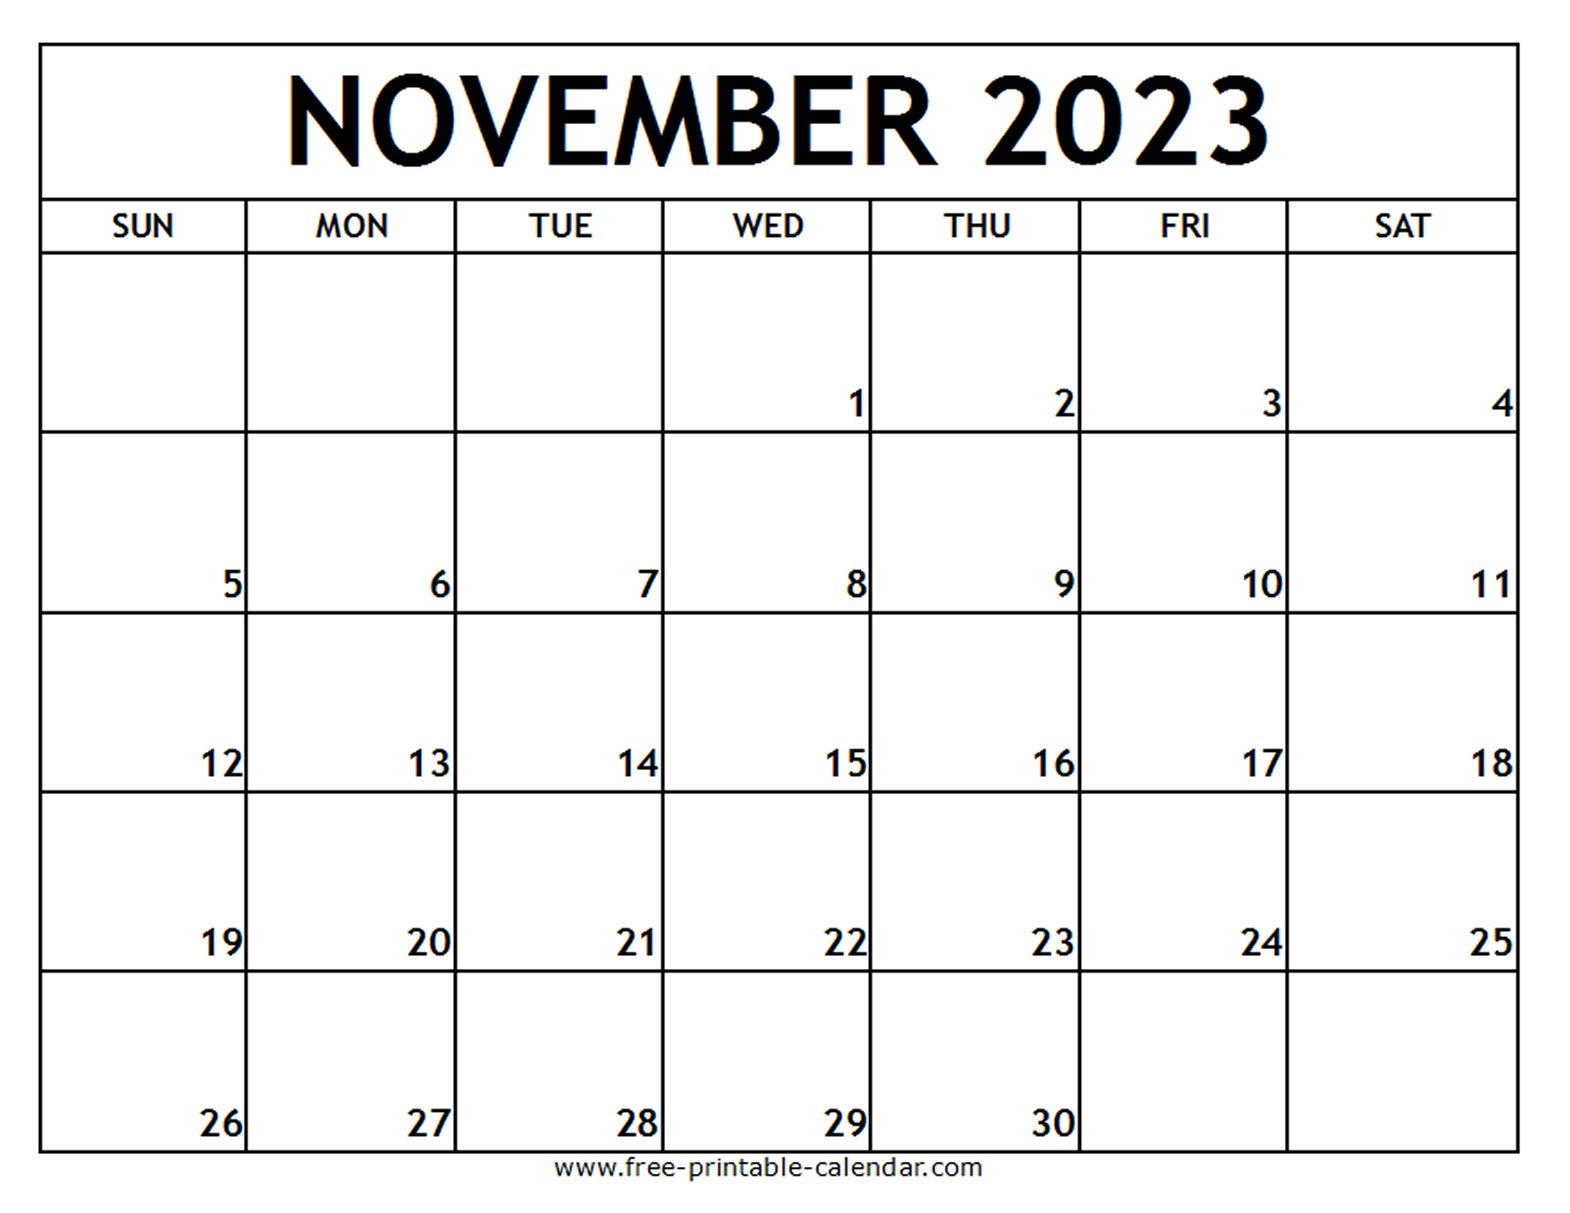 november-2023-calendar-printable-get-calendar-2023-update